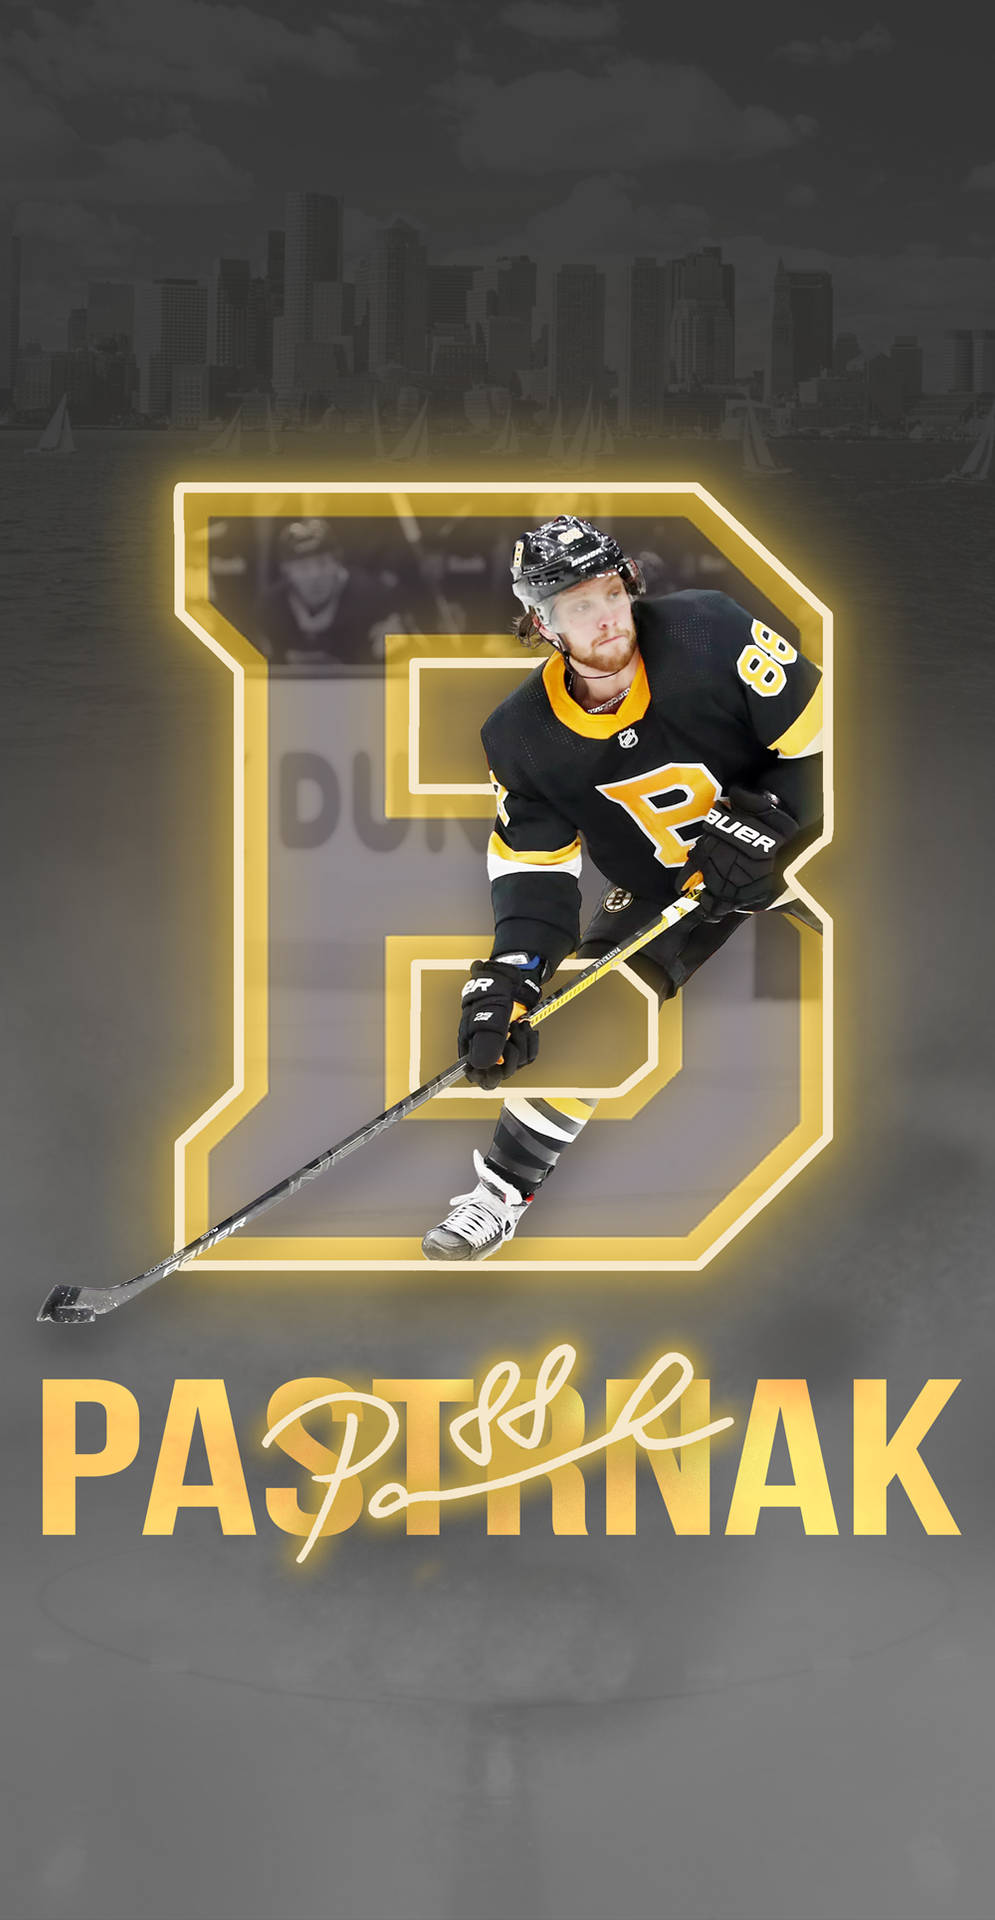 Davidpastrnak Logotipo De Los Boston Bruins Firmado. Fondo de pantalla